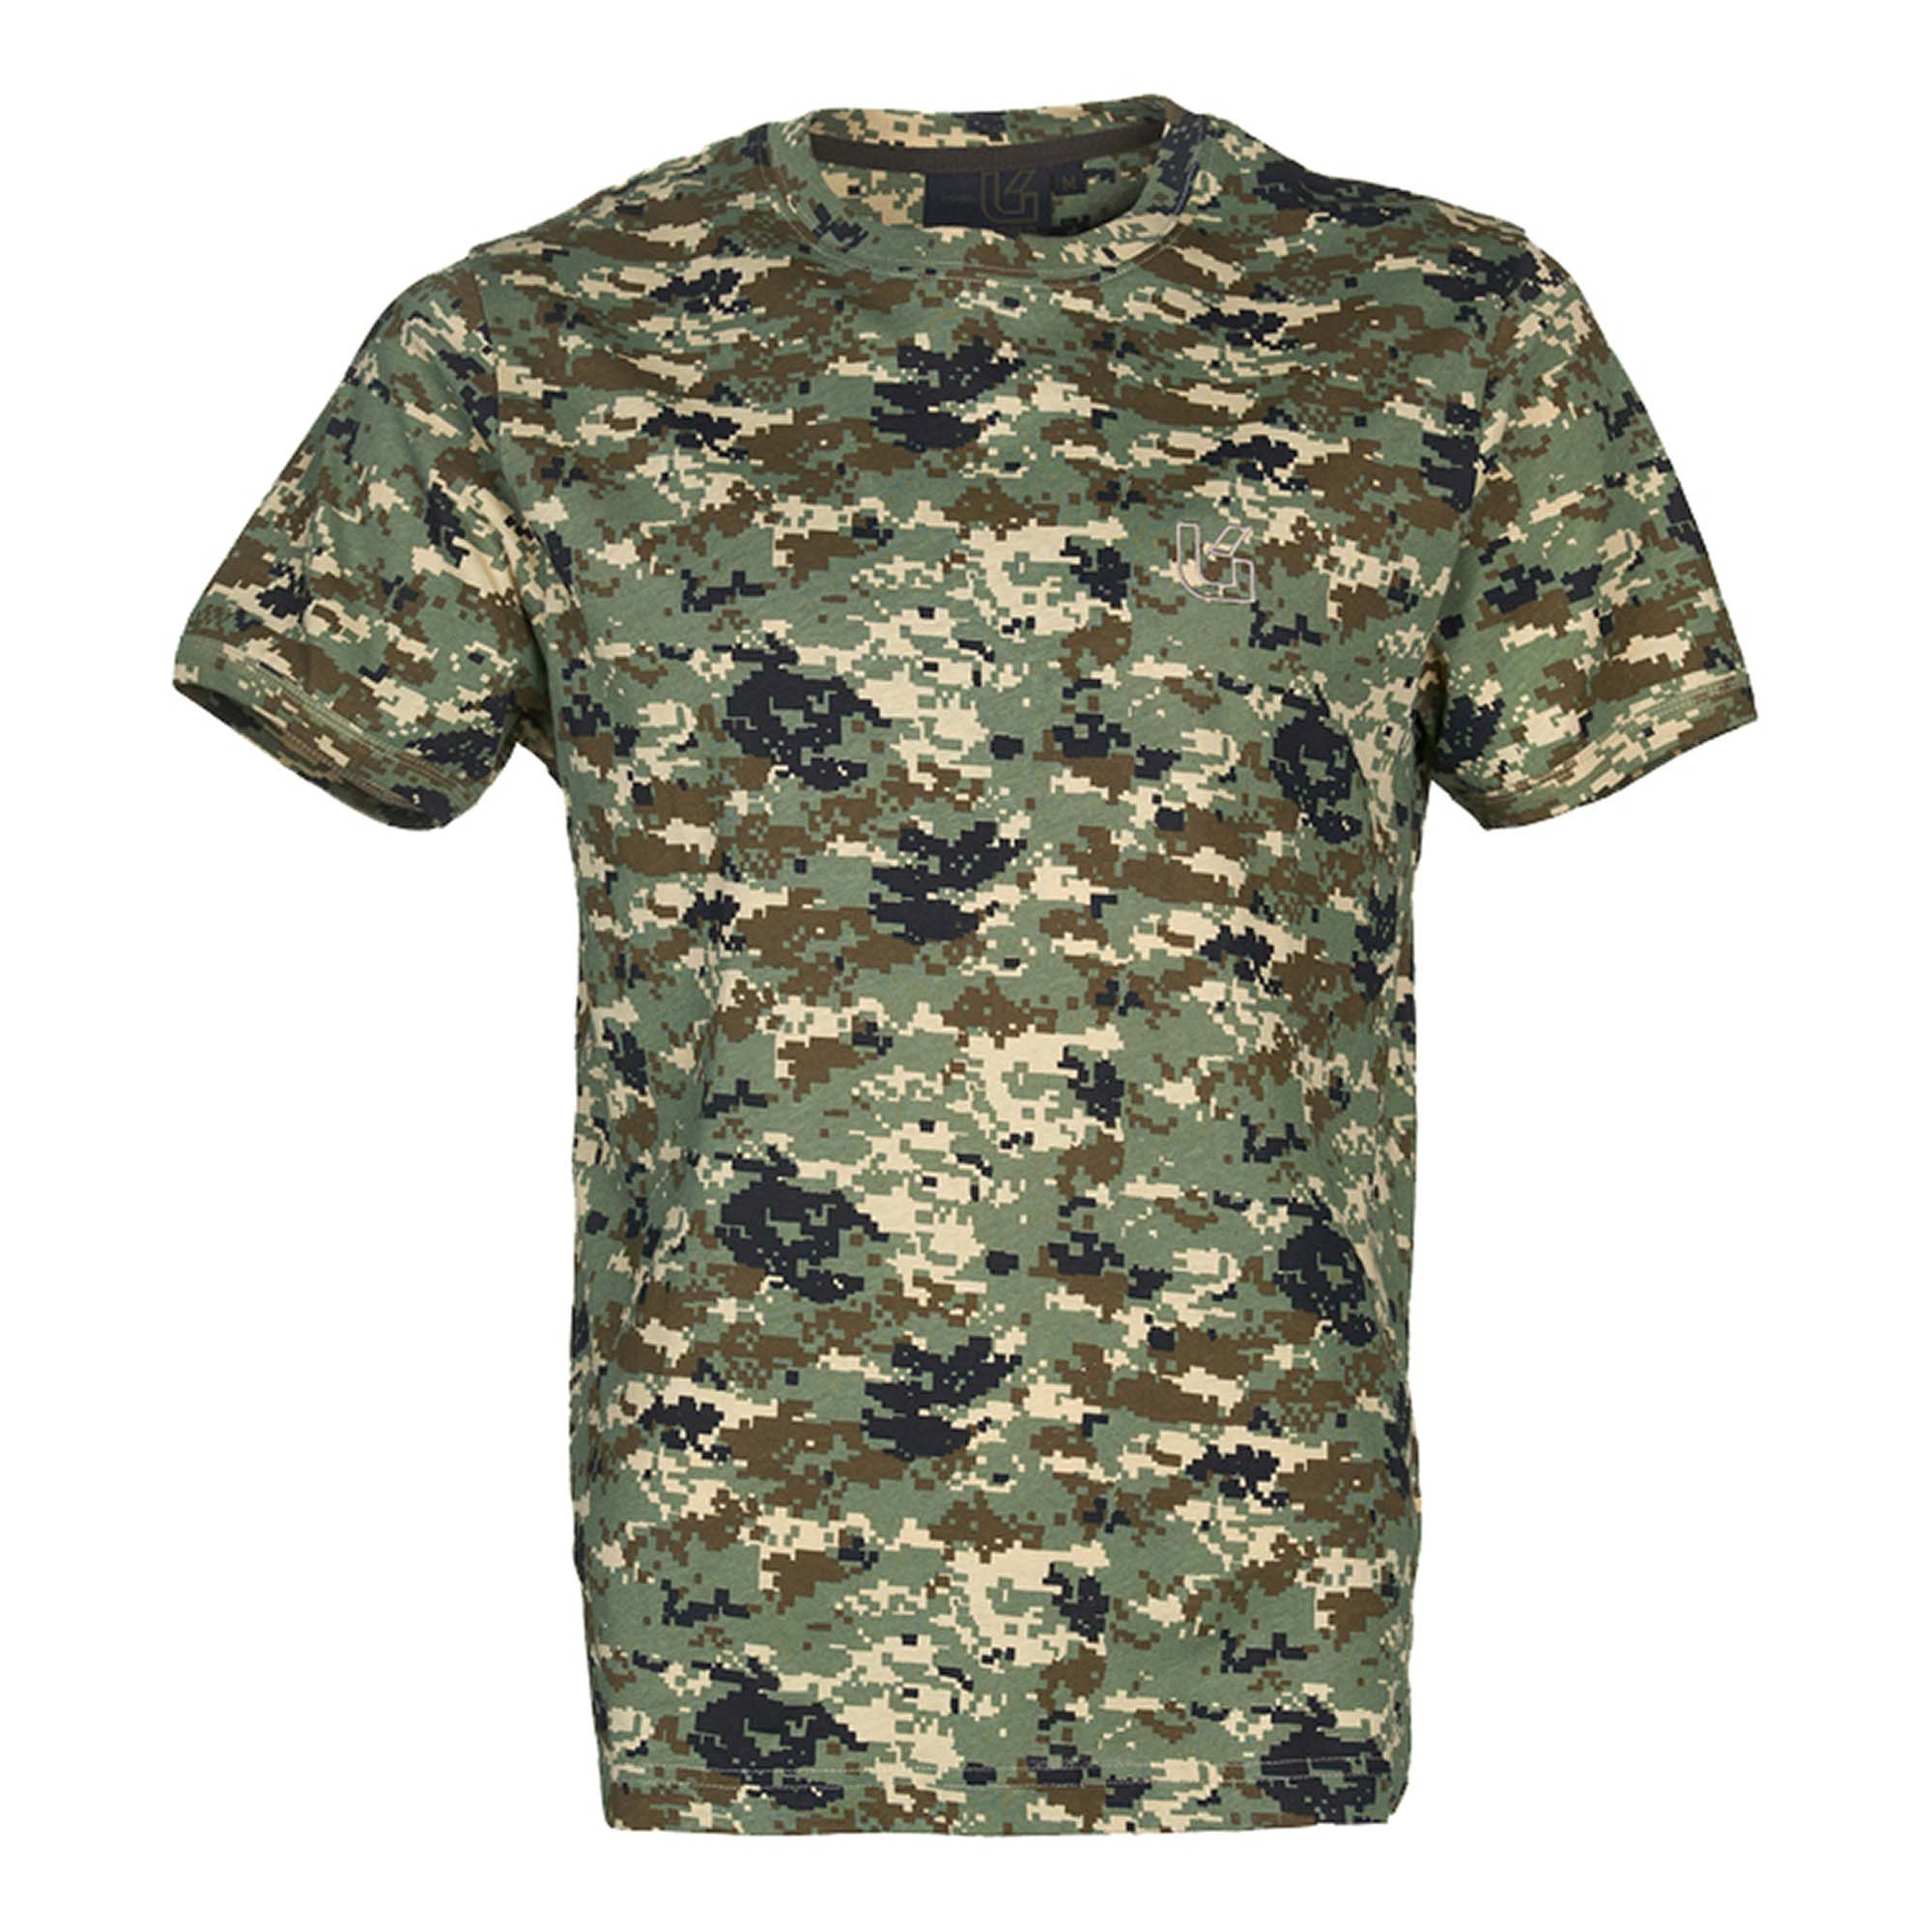 T-shirt camo 1 94000 116